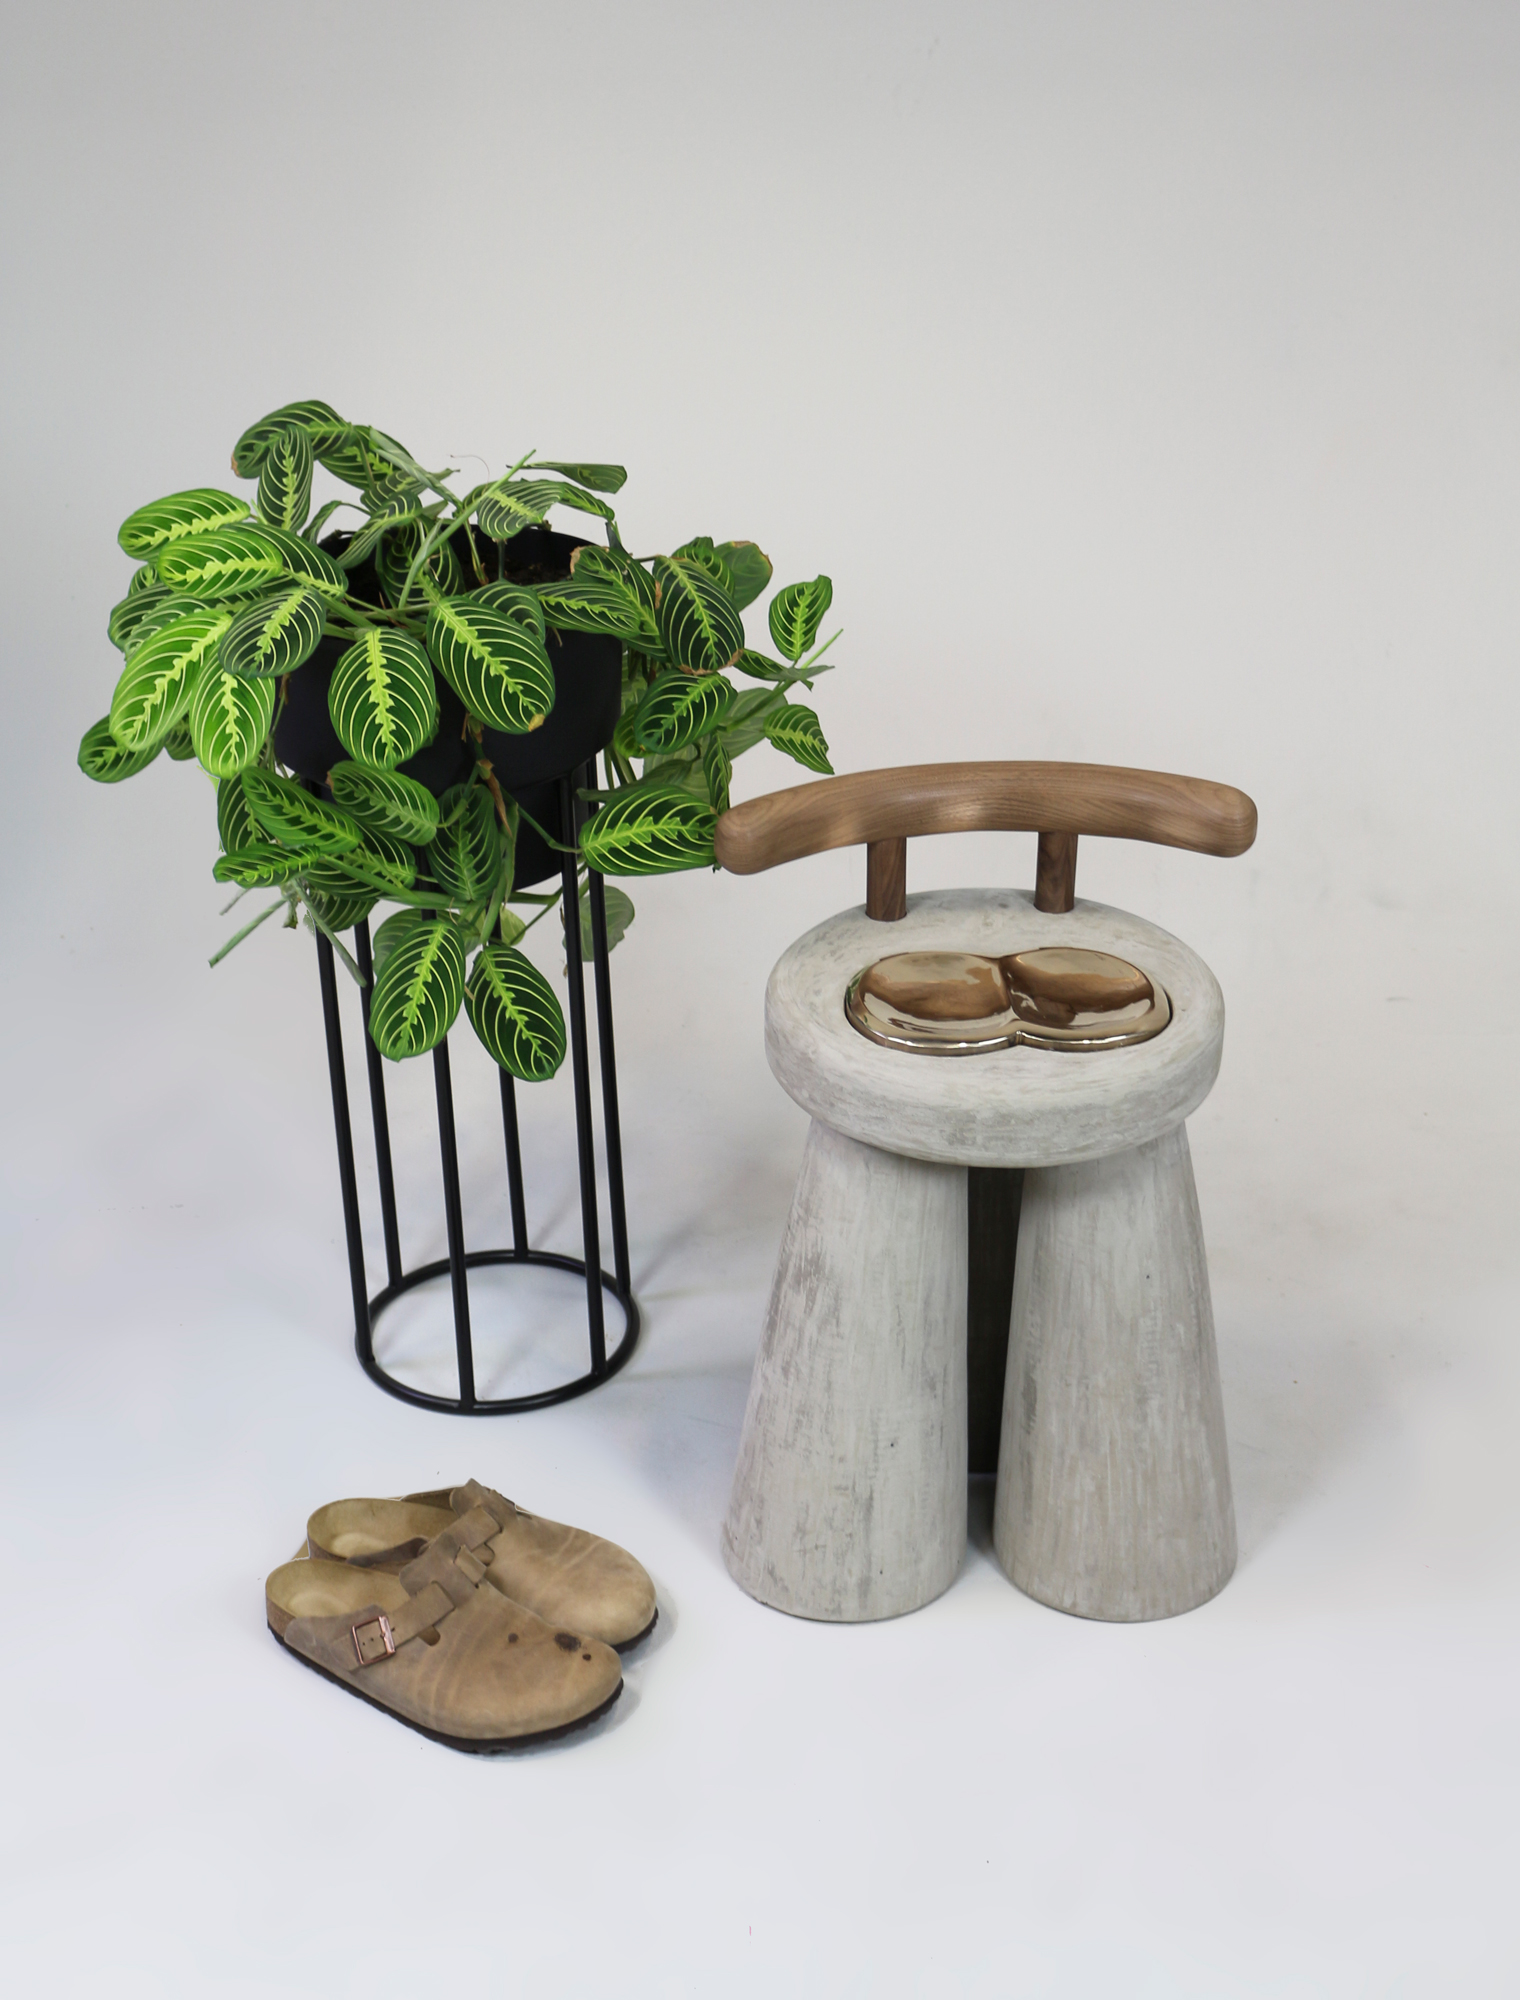 handmade stool next to a houseplant